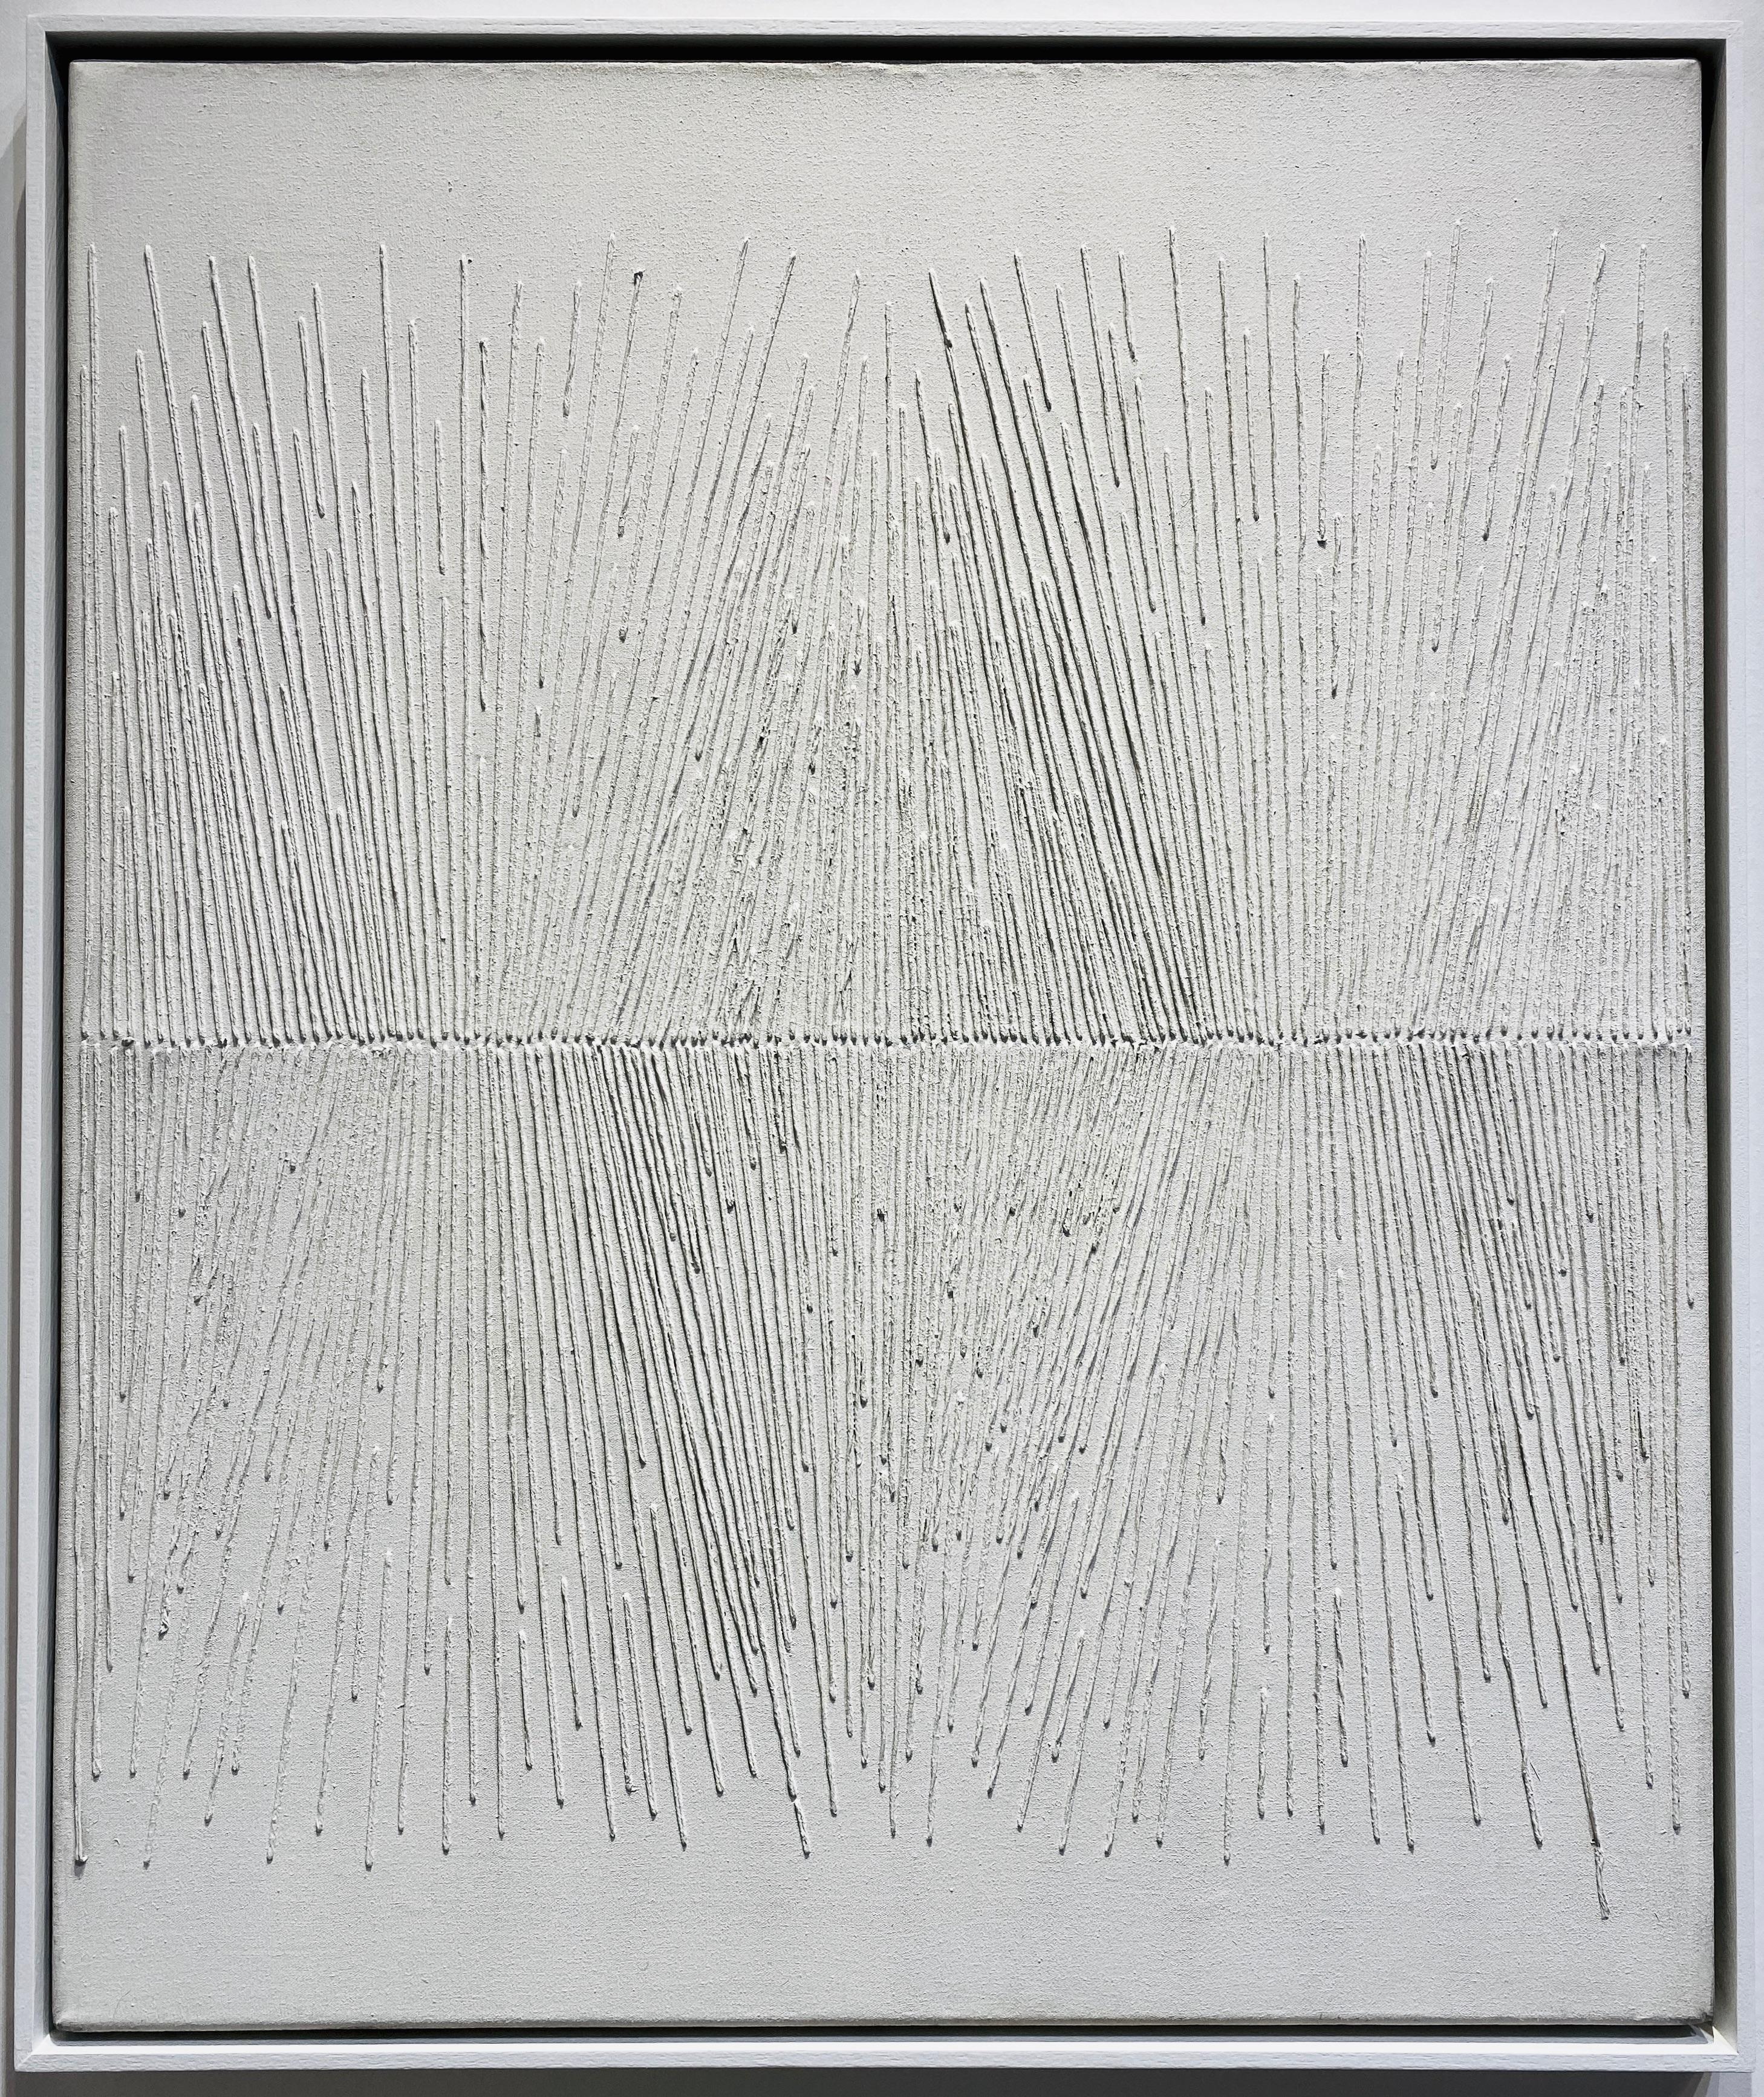 Walter Leblanc Abstract Painting - Twisted Strings 1965/68, Op Art, Kinetic Art, Zero Group, Avantgarde, Minimalism